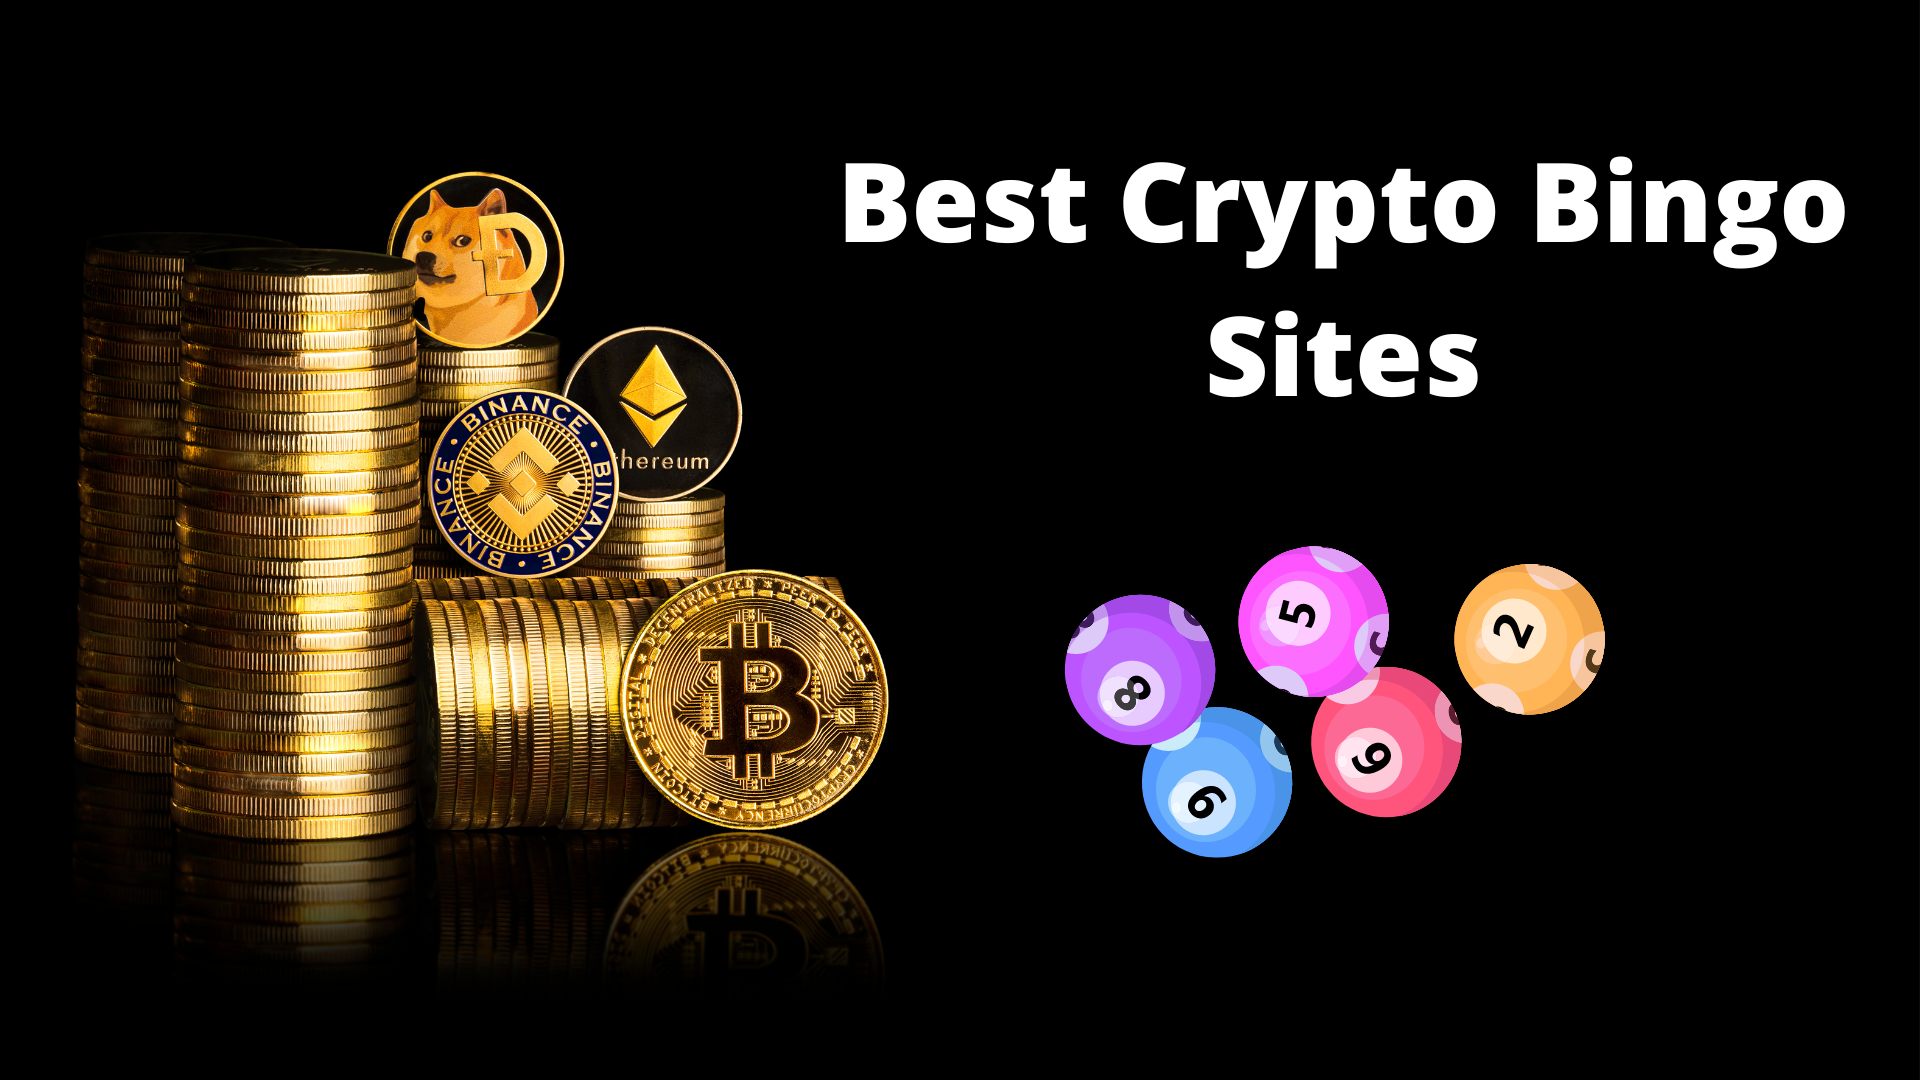 crypto com blockchain bingo sites bitcoin doge binance smartbingoguide